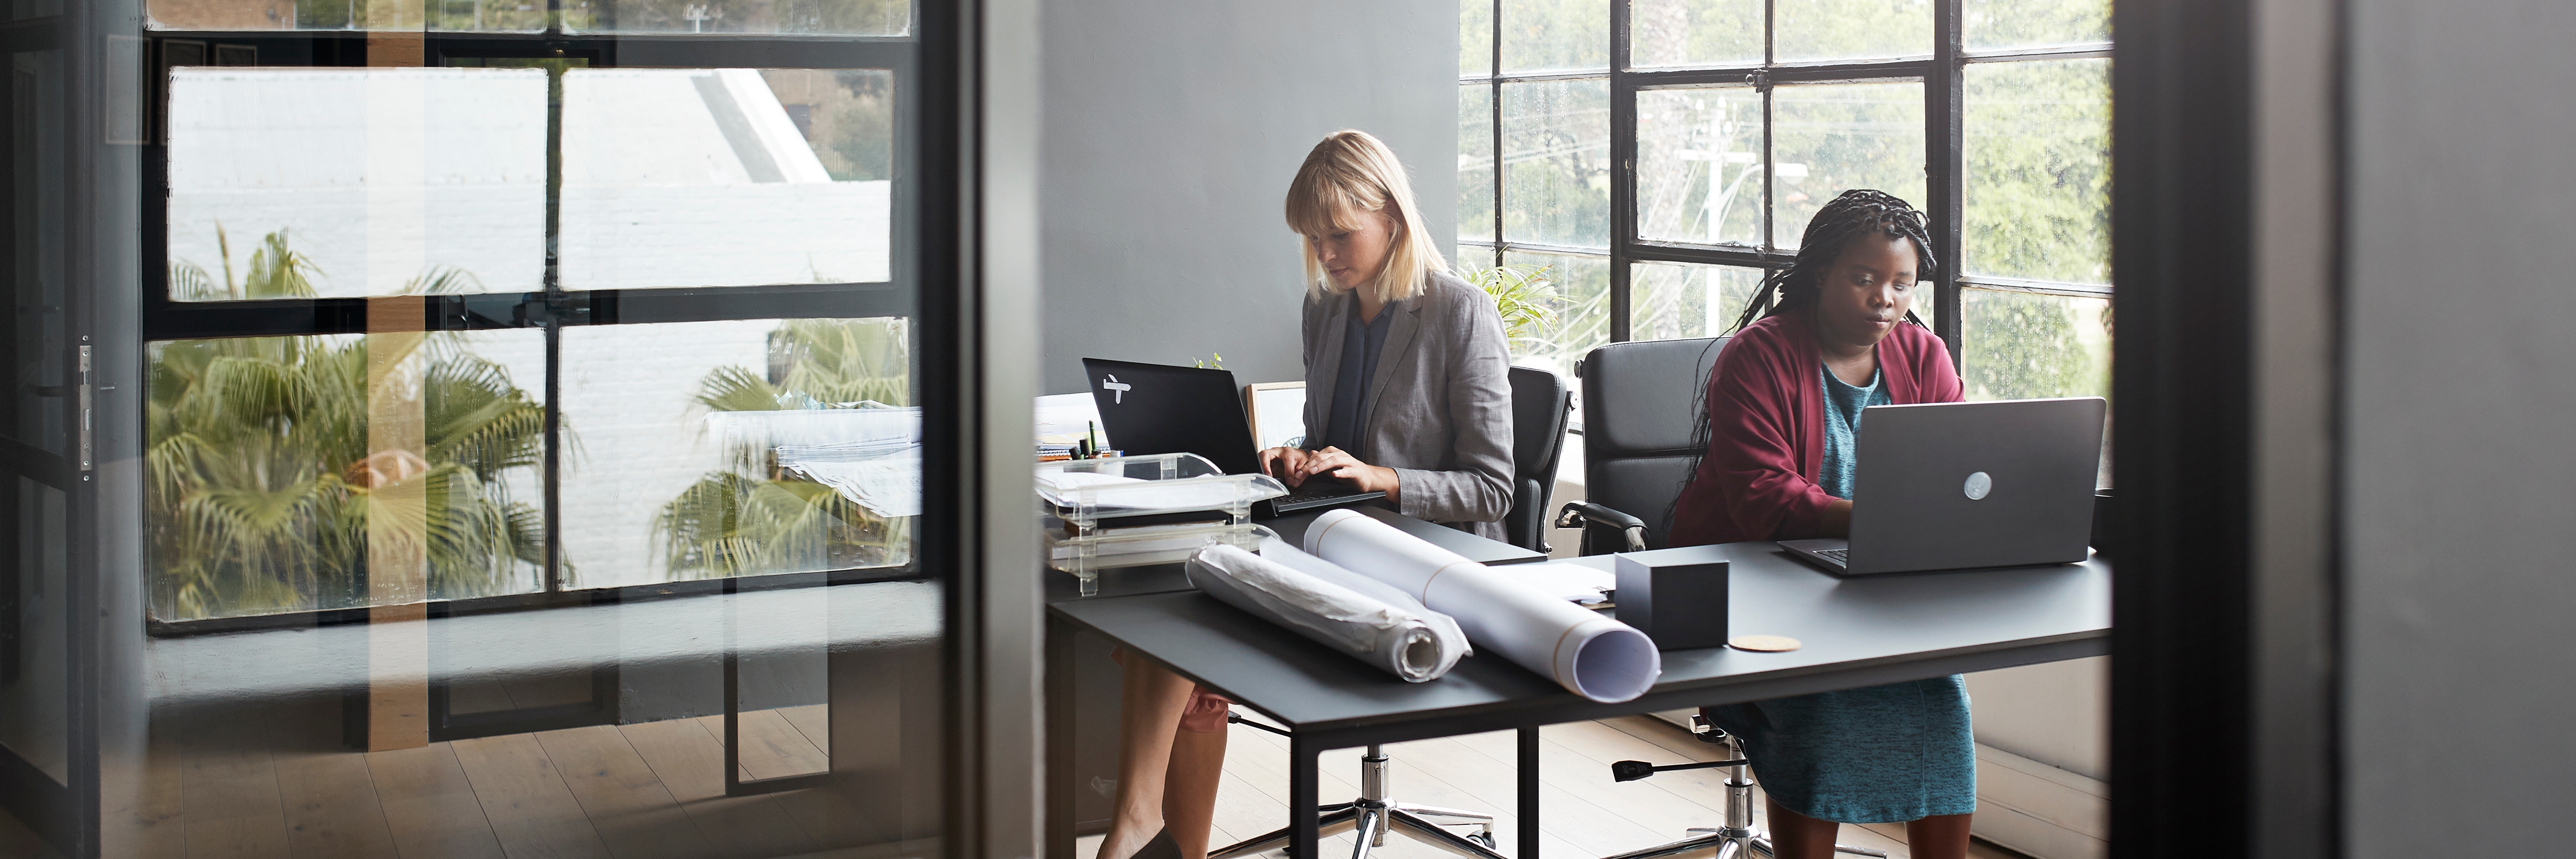 Businesswomen working on laptop at desk in modern office.